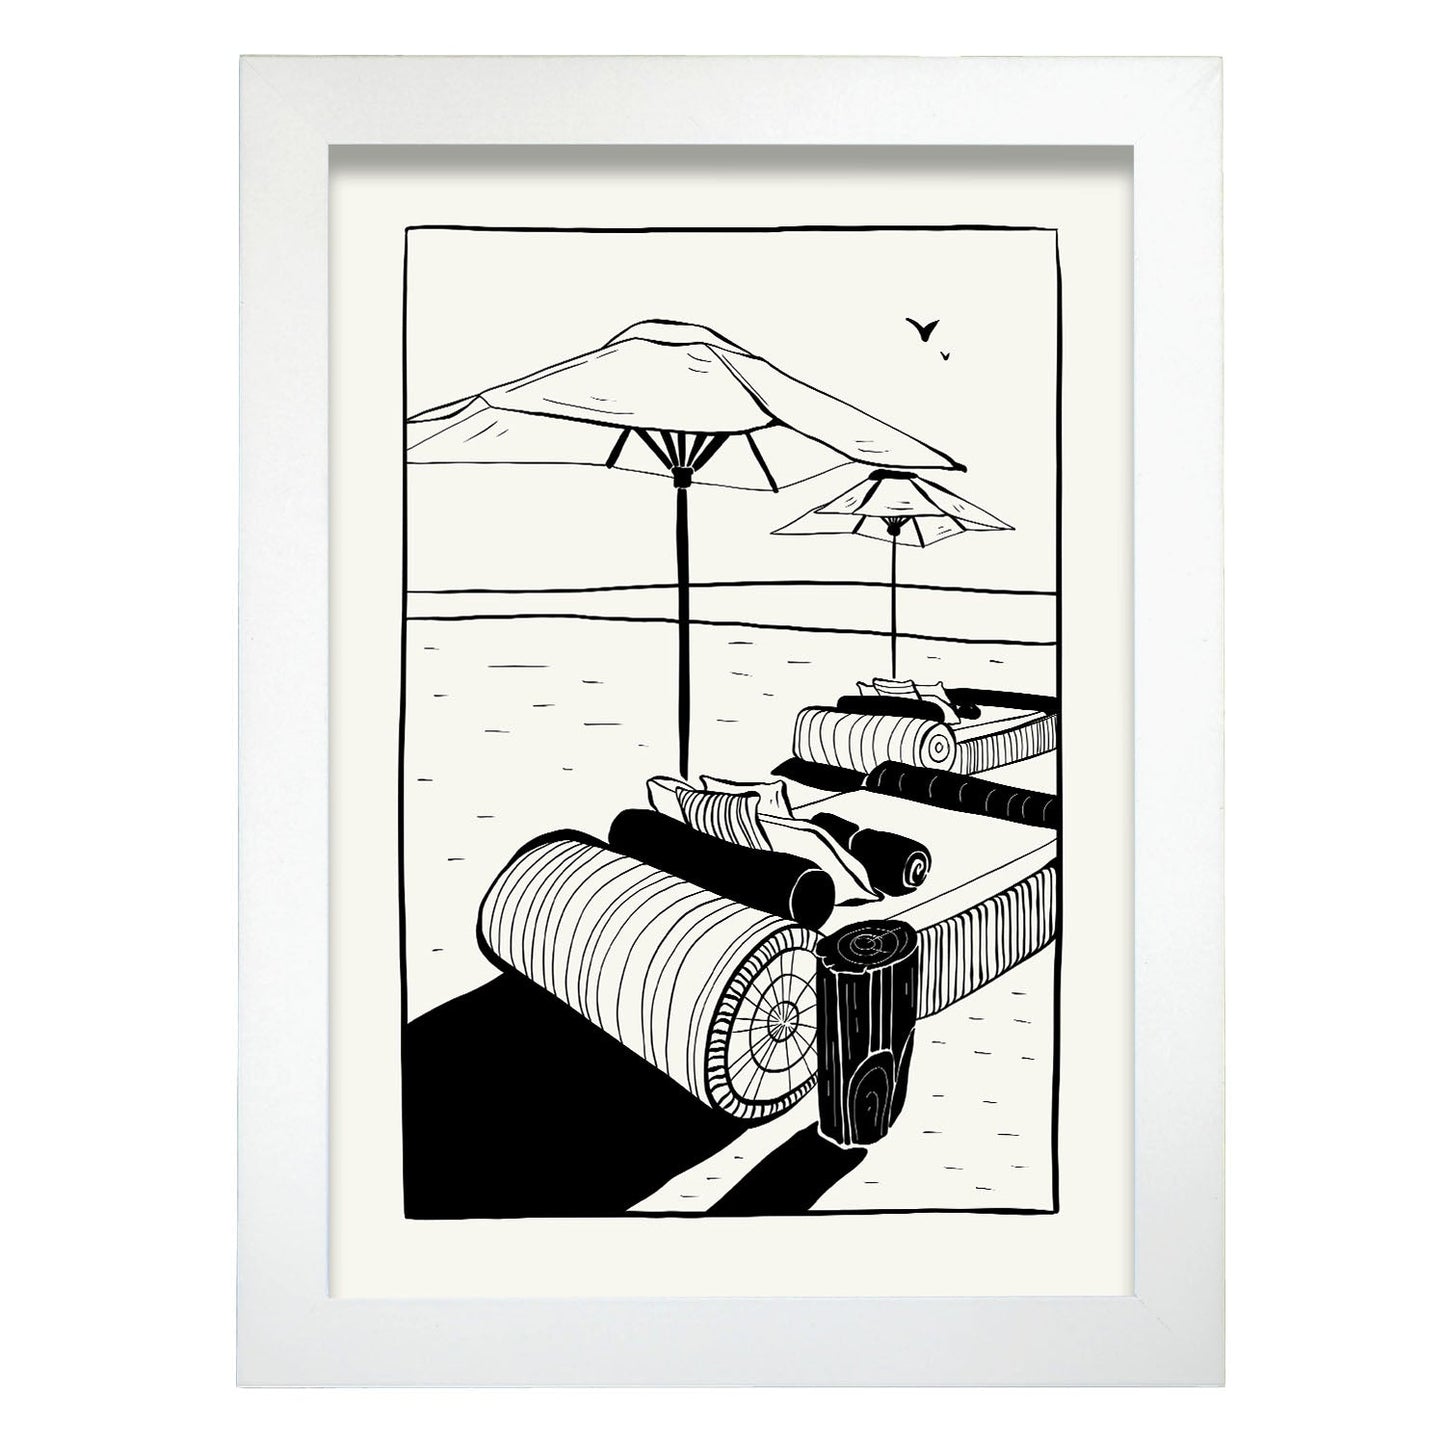 Beachside Umbrella-Artwork-Nacnic-A4-Marco Blanco-Nacnic Estudio SL